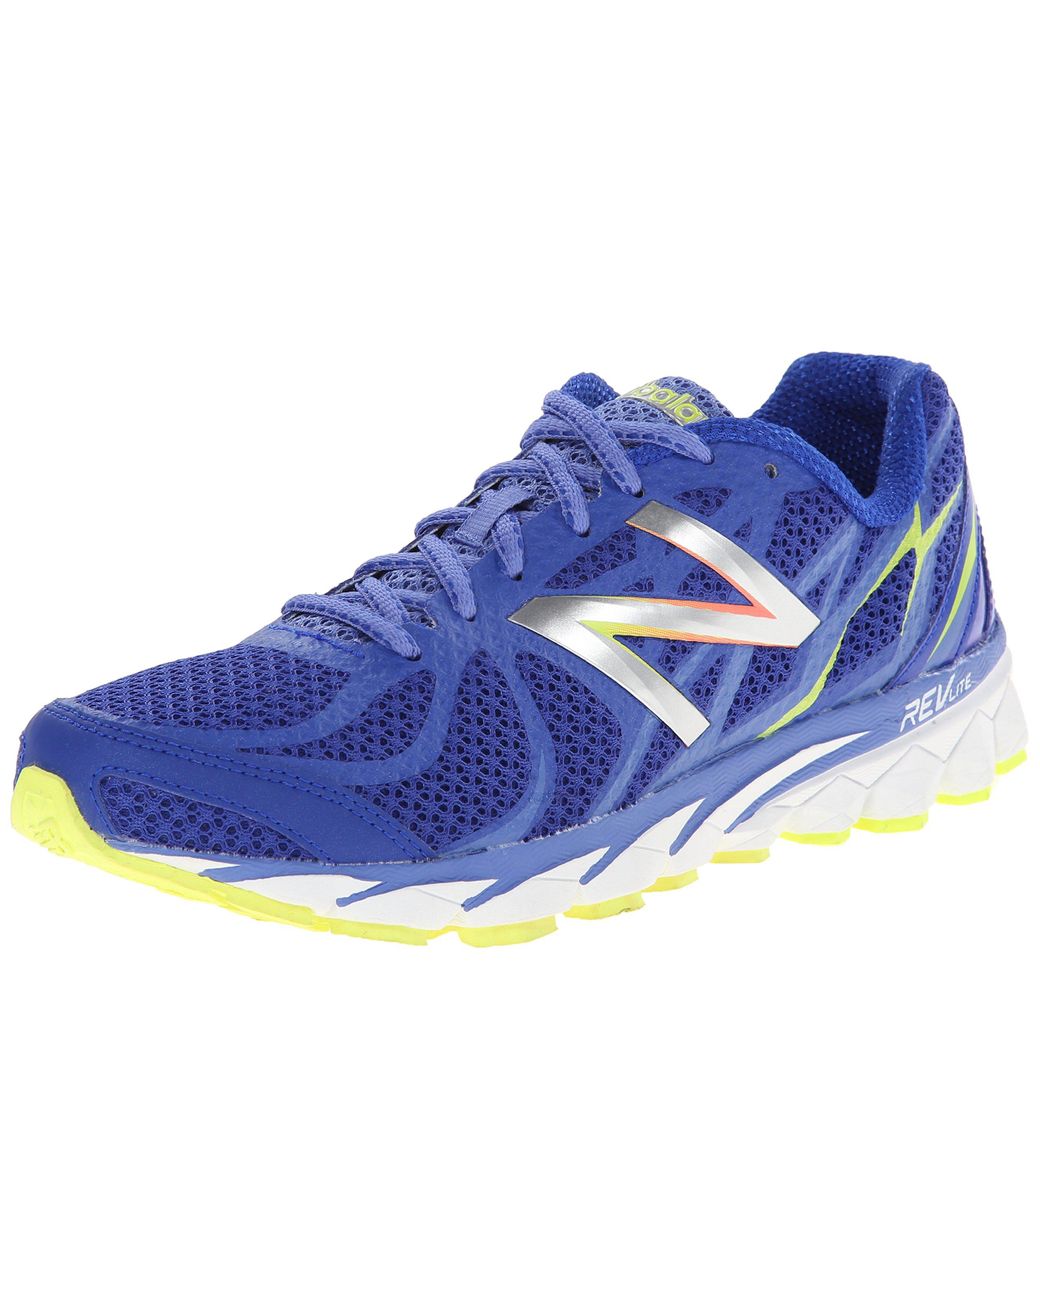 New Balance 3190 V1 Running Shoe in Blue | Lyst